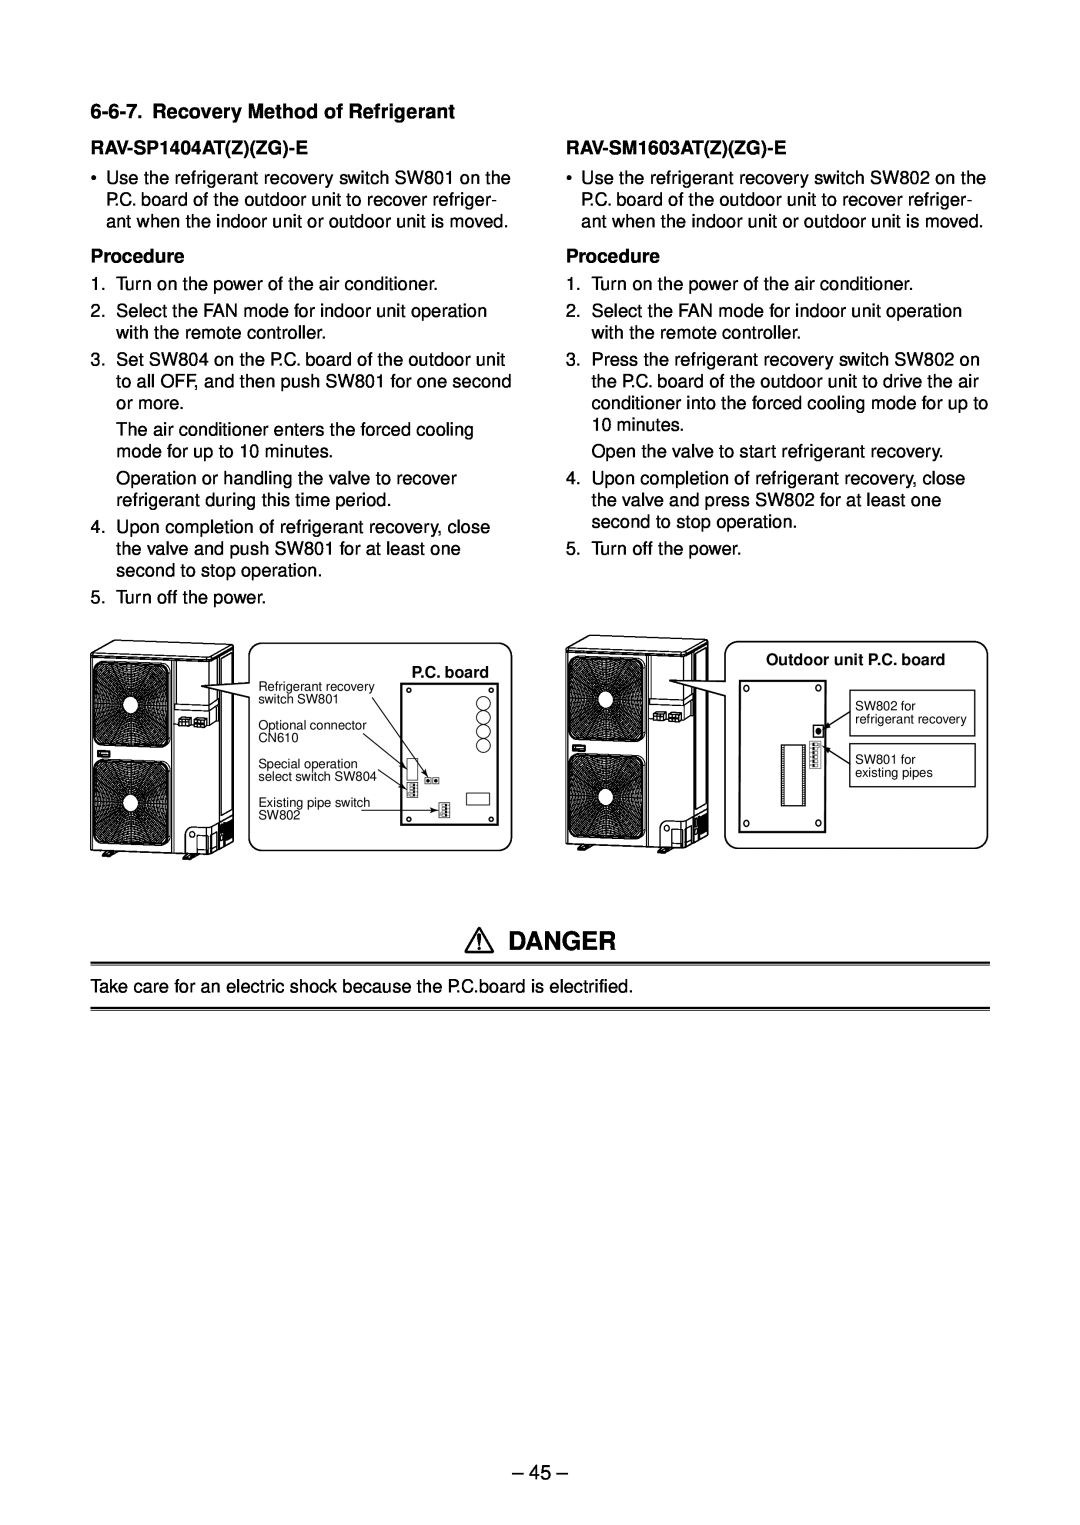 Toshiba RAV-SM1603ATZG-E Danger, Recovery Method of Refrigerant, 45, RAV-SP1404ATZZG-E, Procedure, RAV-SM1603ATZZG-E 